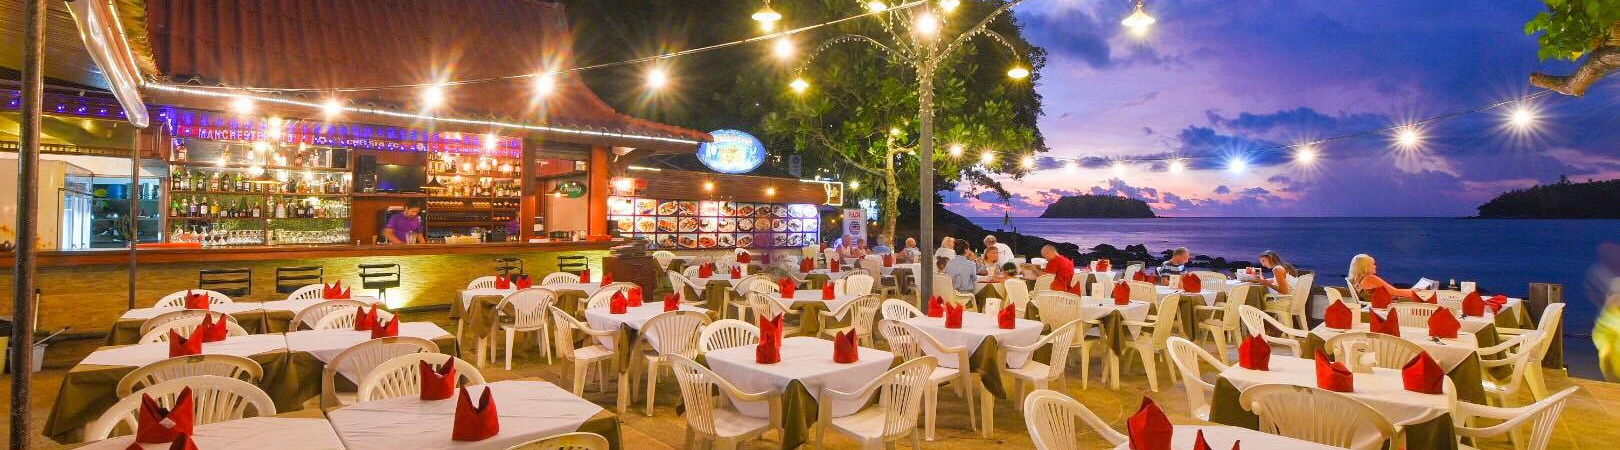 Kata B.B.Q - Fresh Seafood Grill Restaurant Kata Beach Phuket Thailand